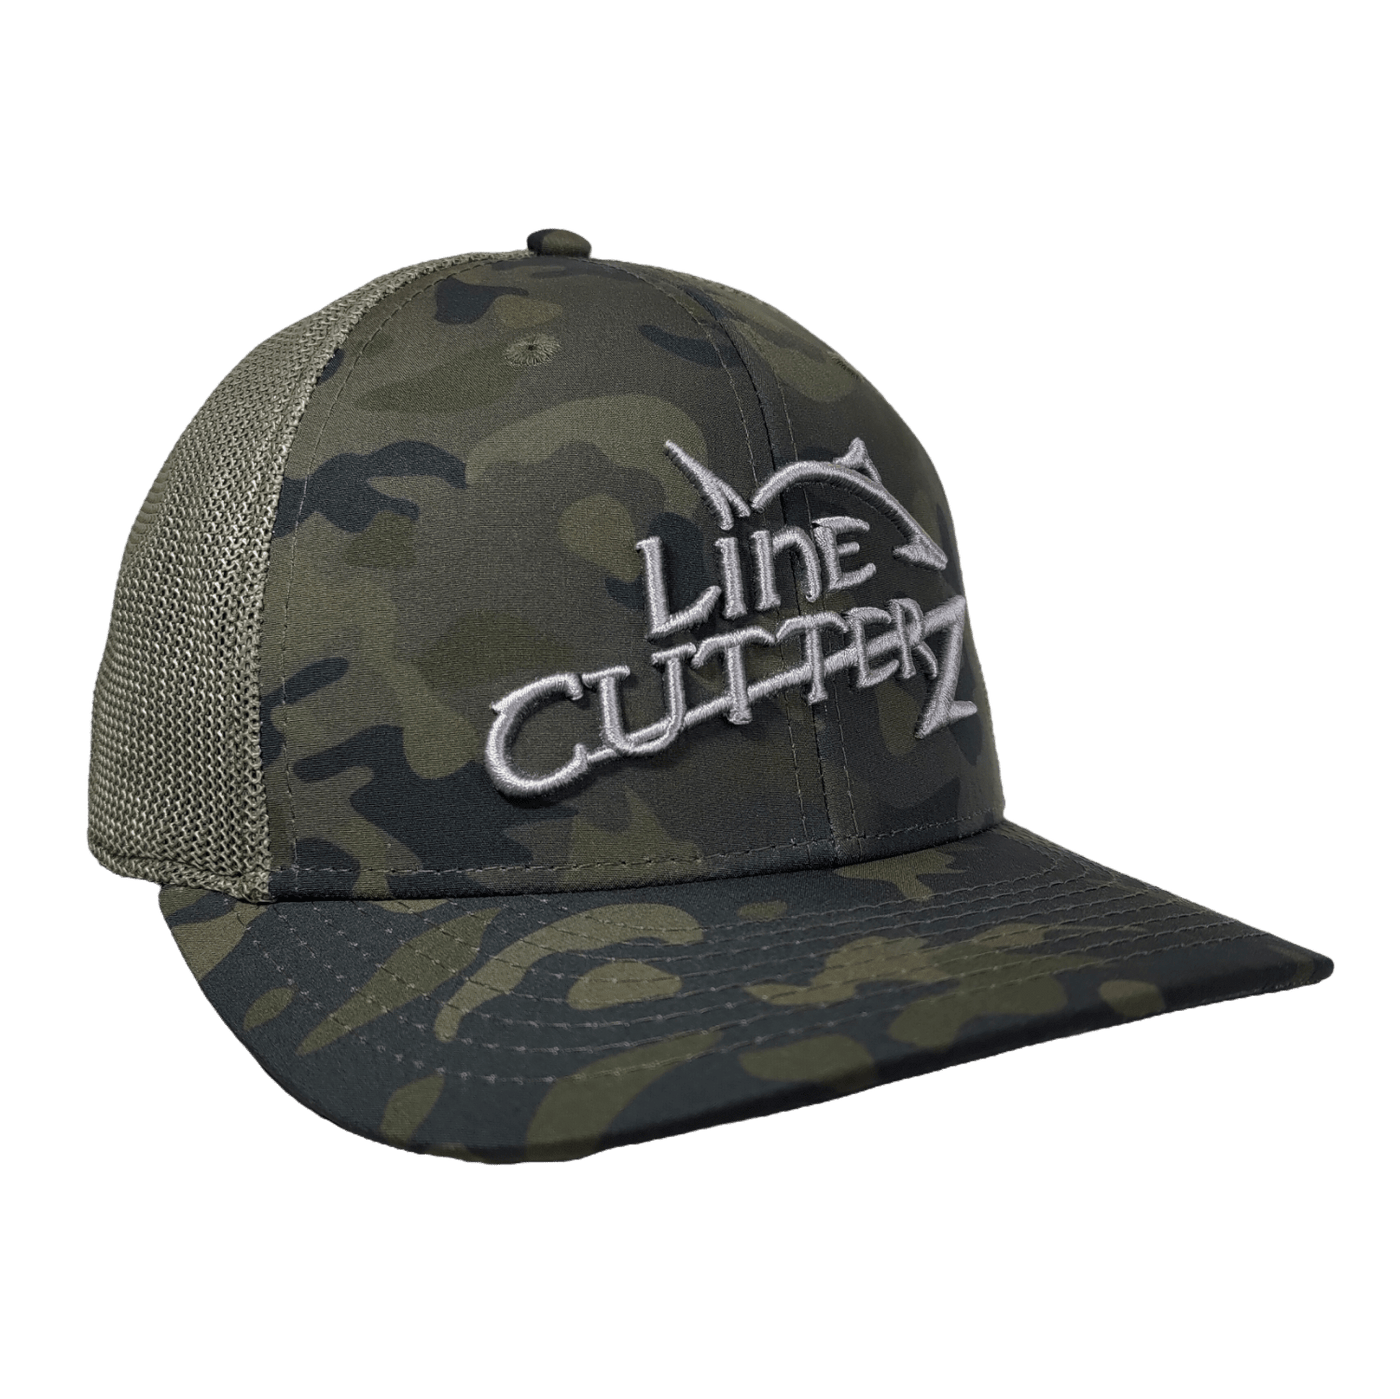 Line Cutterz Raised Embroidery A-Flex Camouflage Hat Hats Line Cutterz 